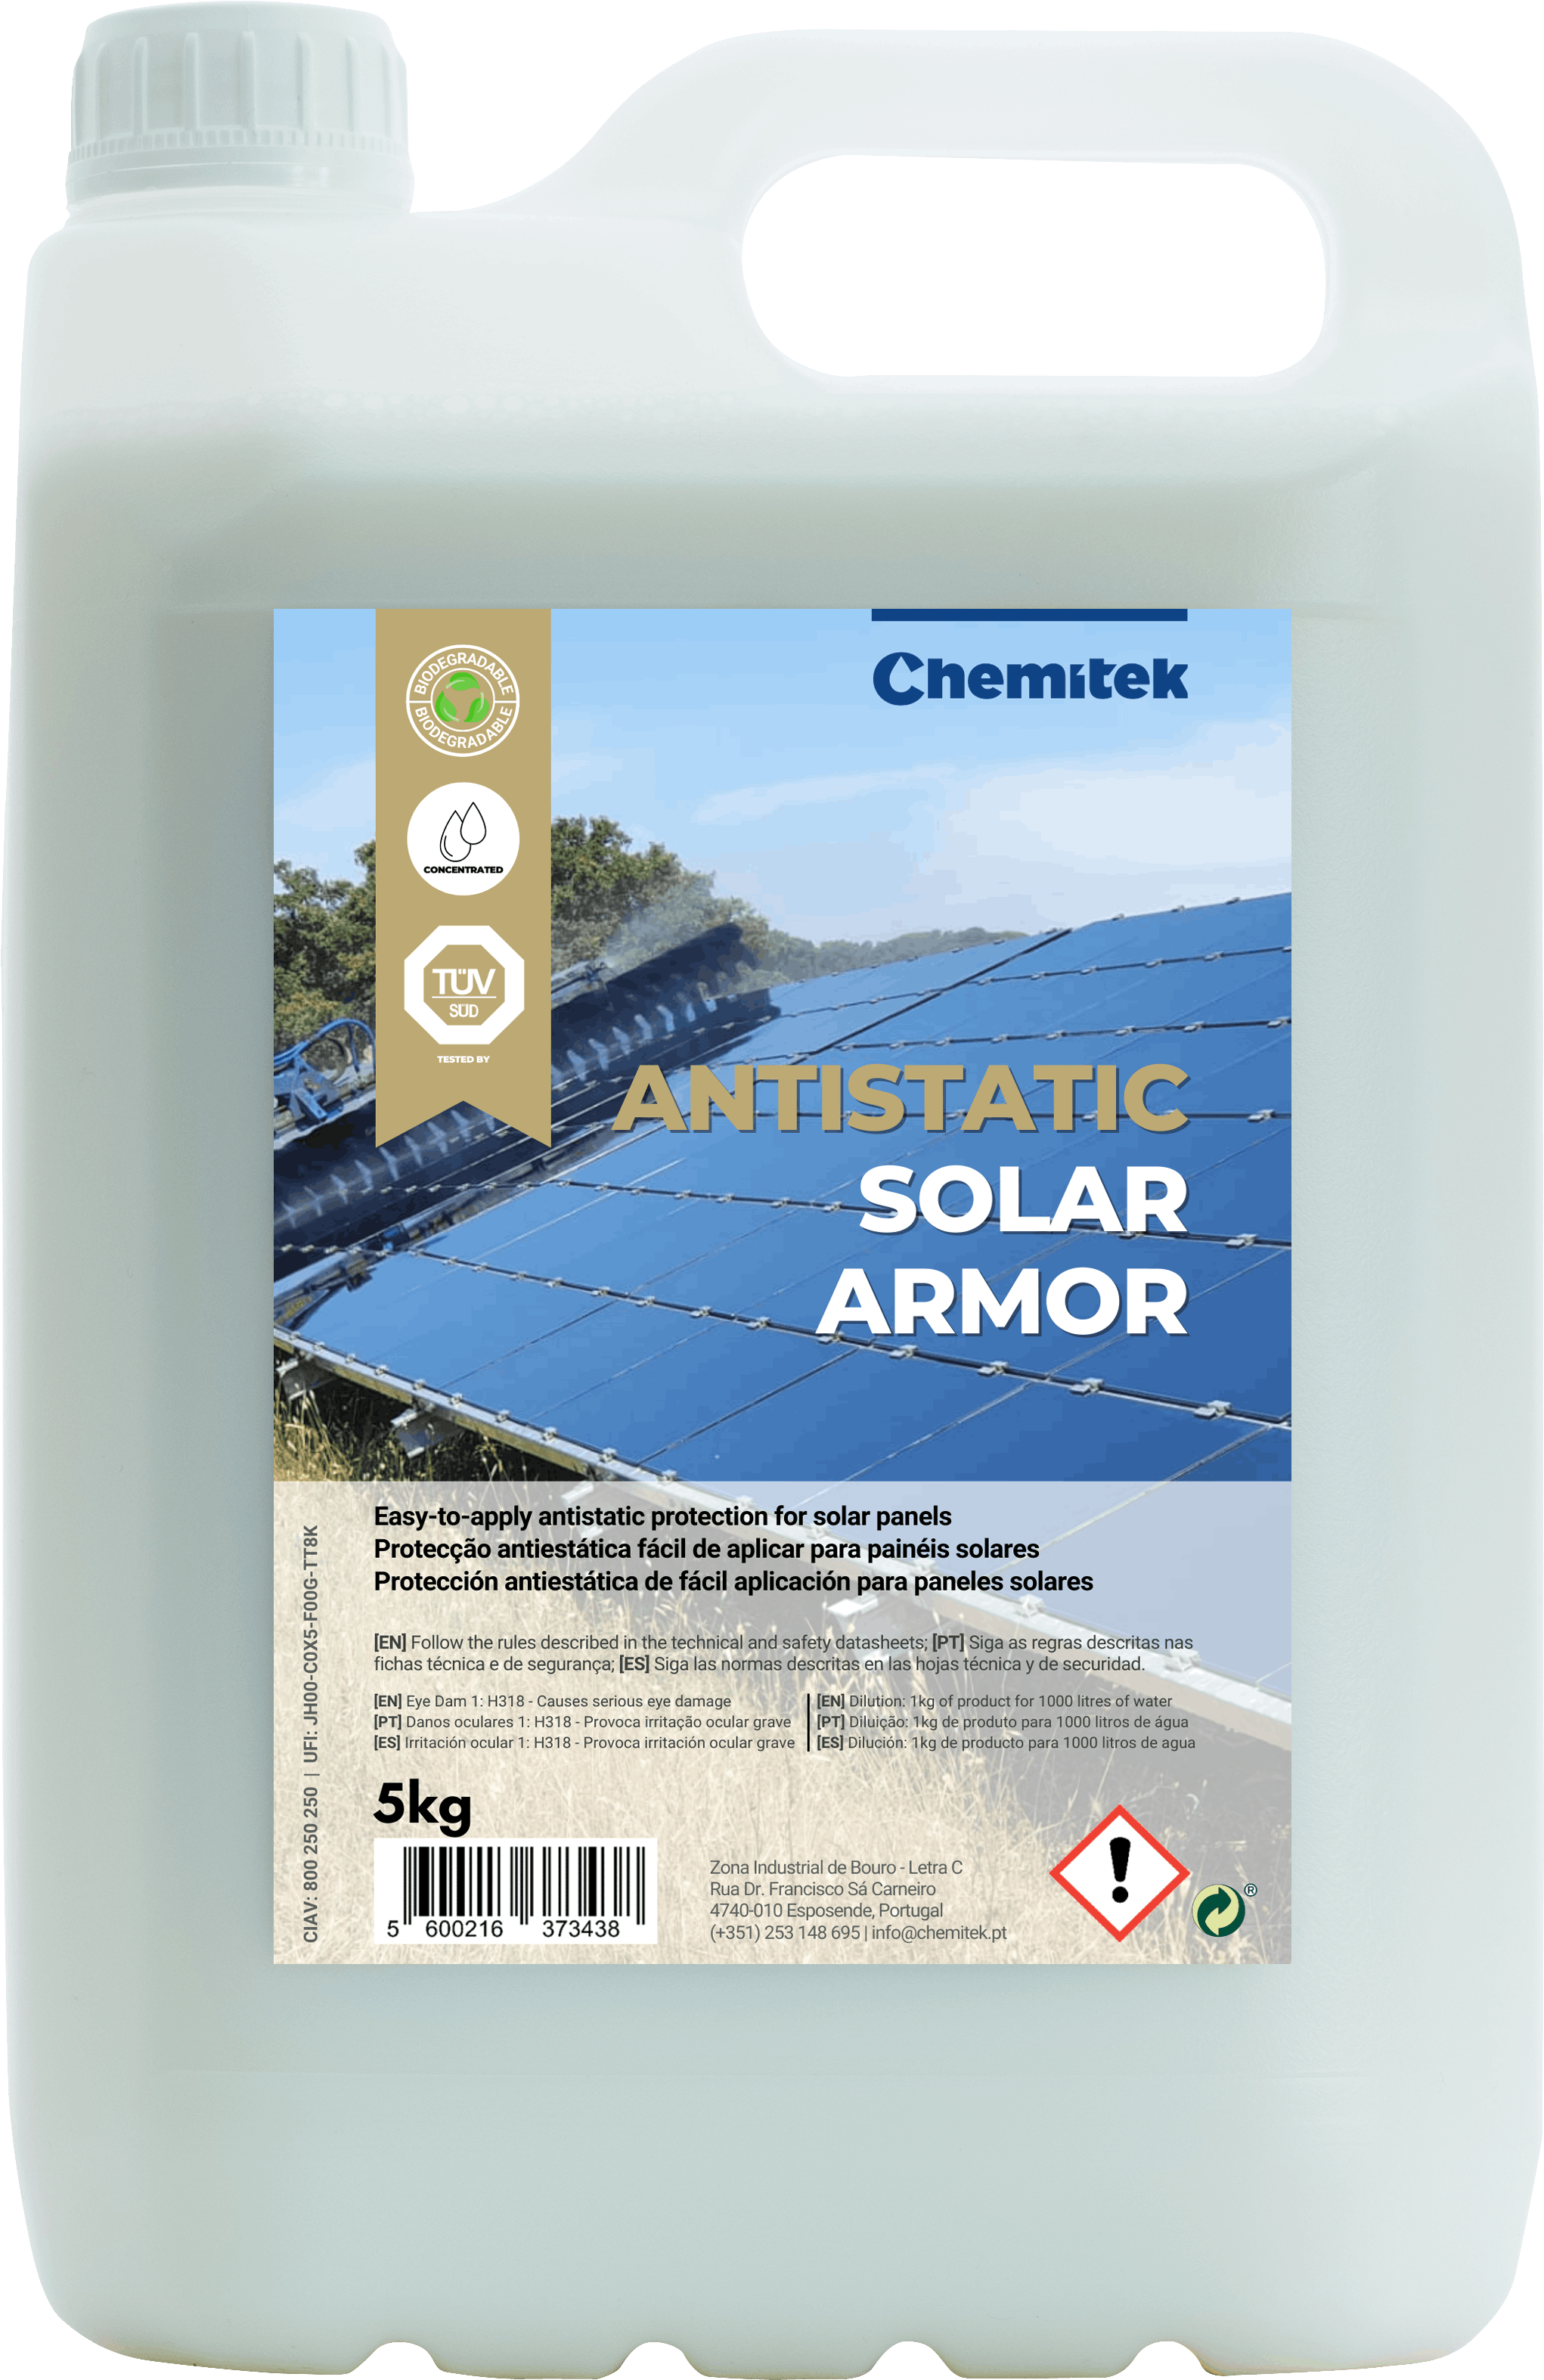 boost-solar-panel-efficiency-with-antistatic-solar-armor